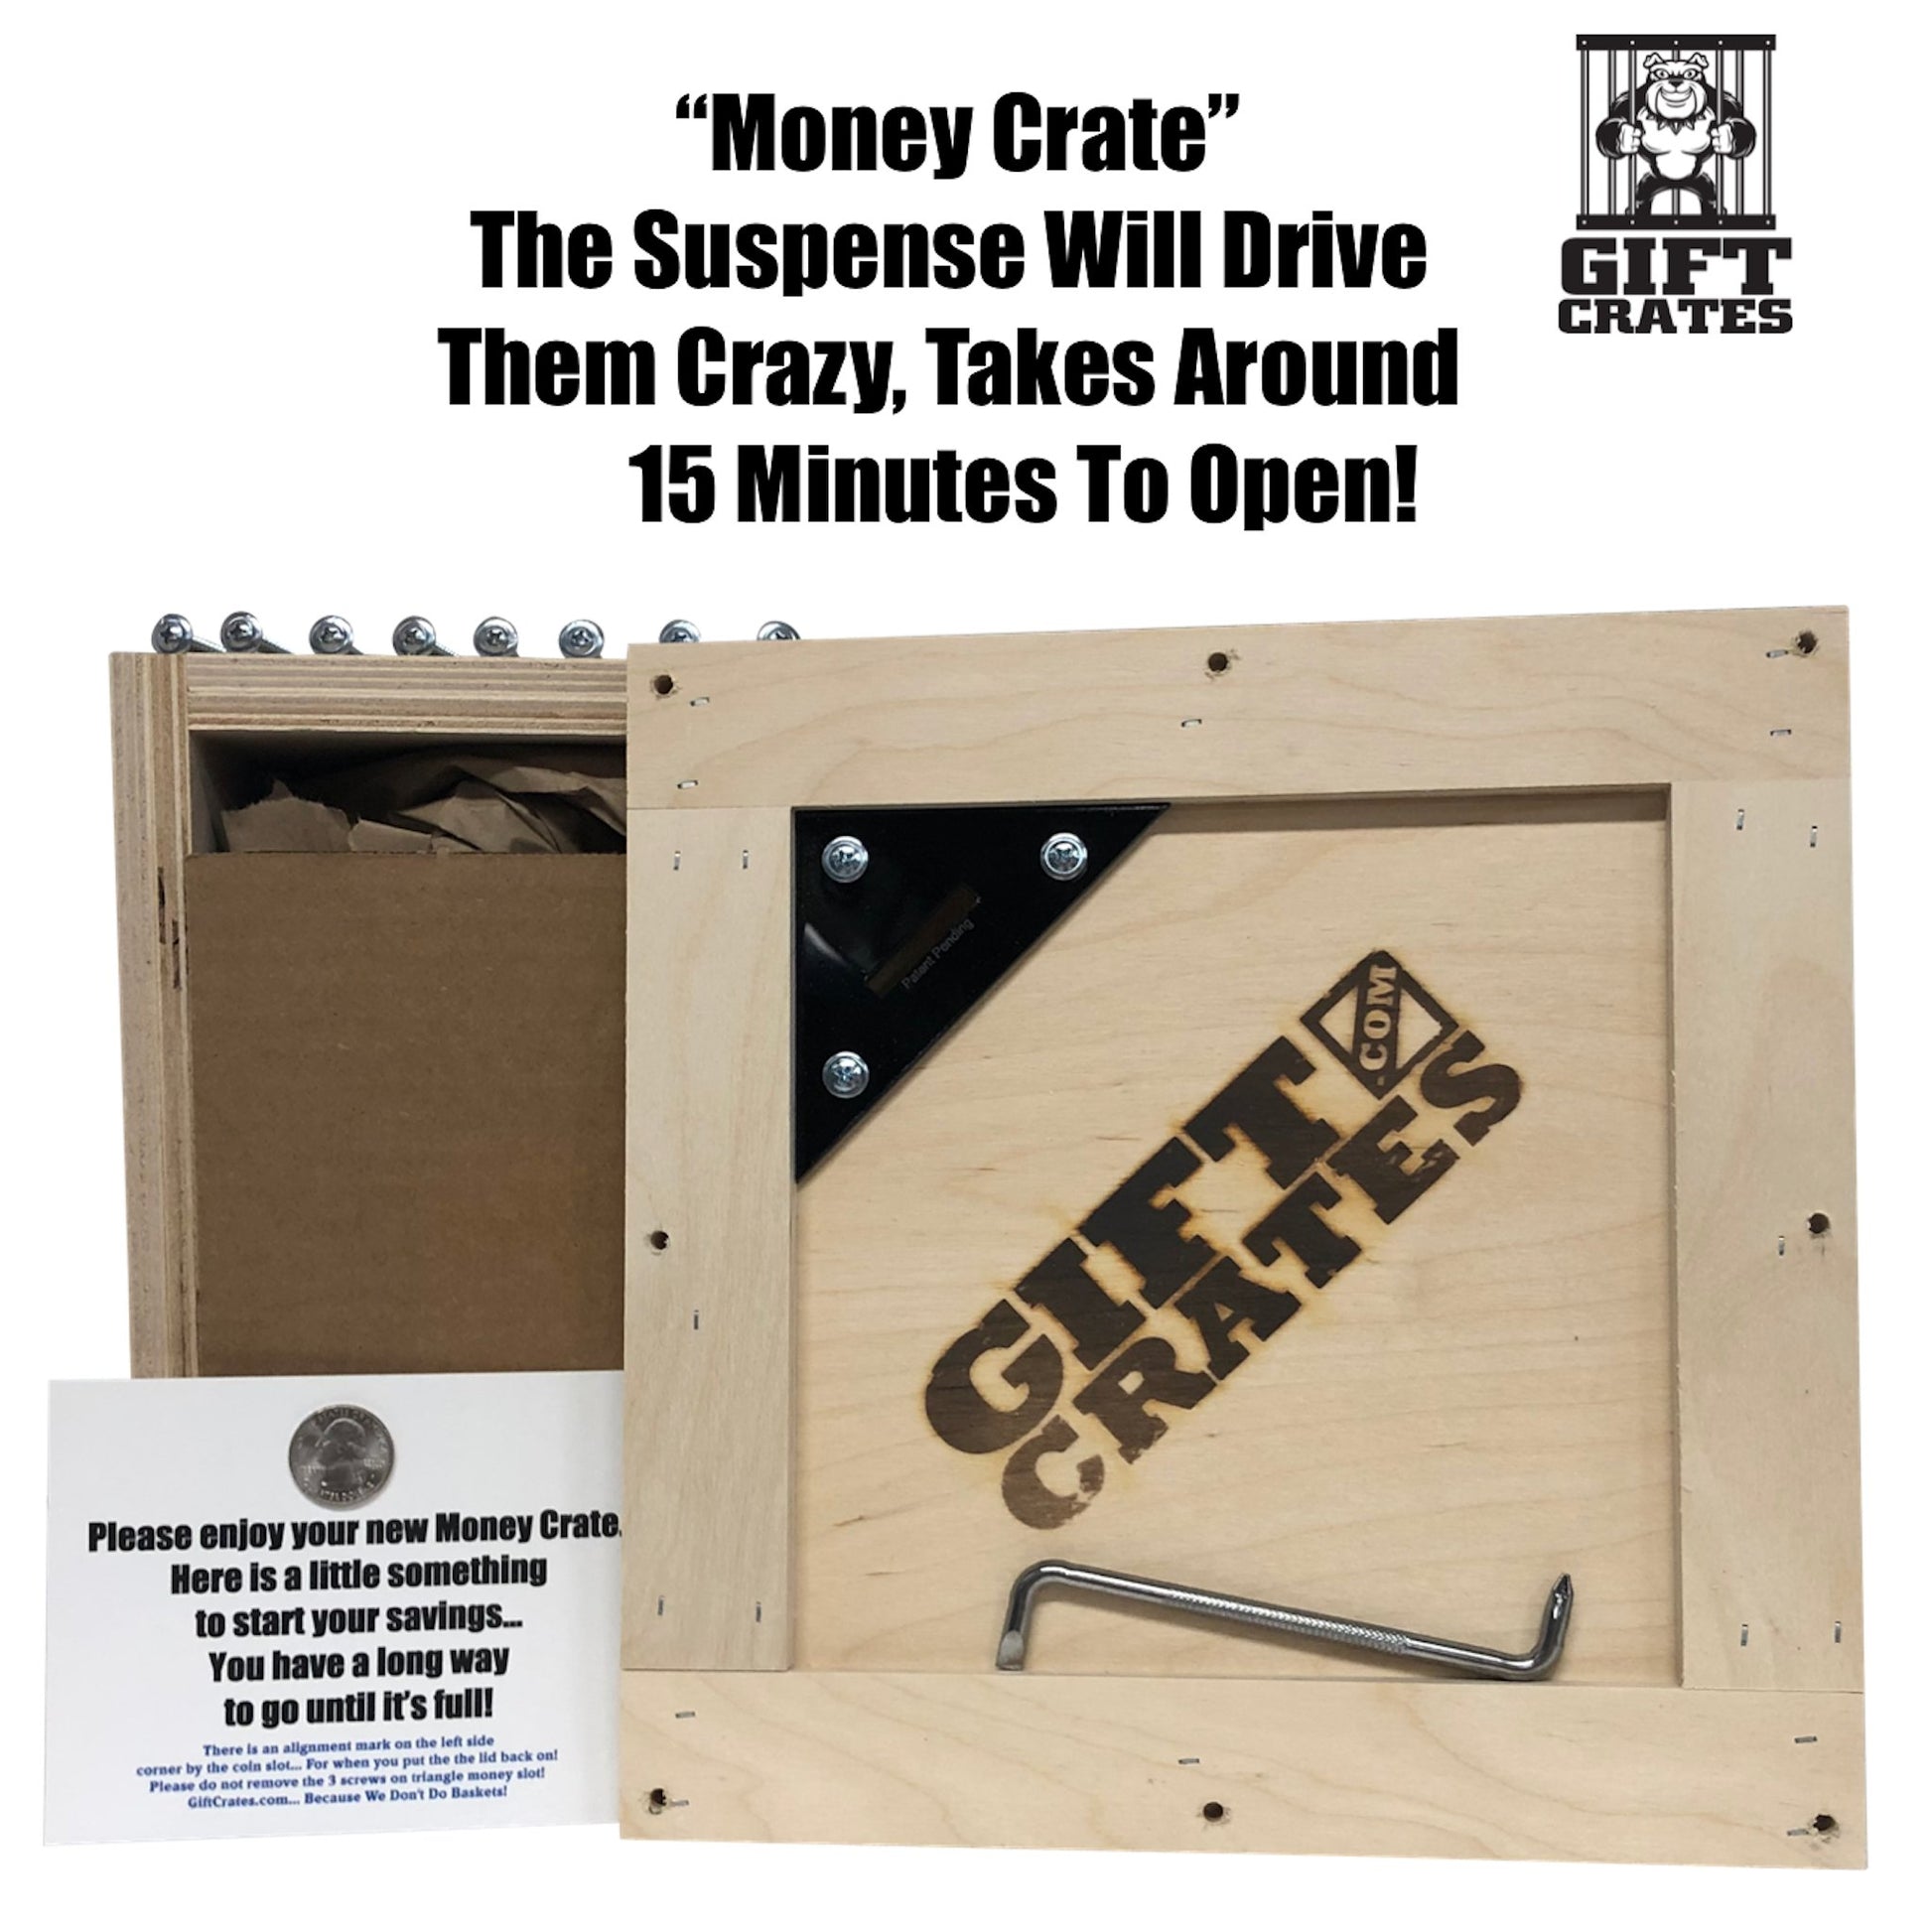 The Premium Coffee Crate - Gift Crates